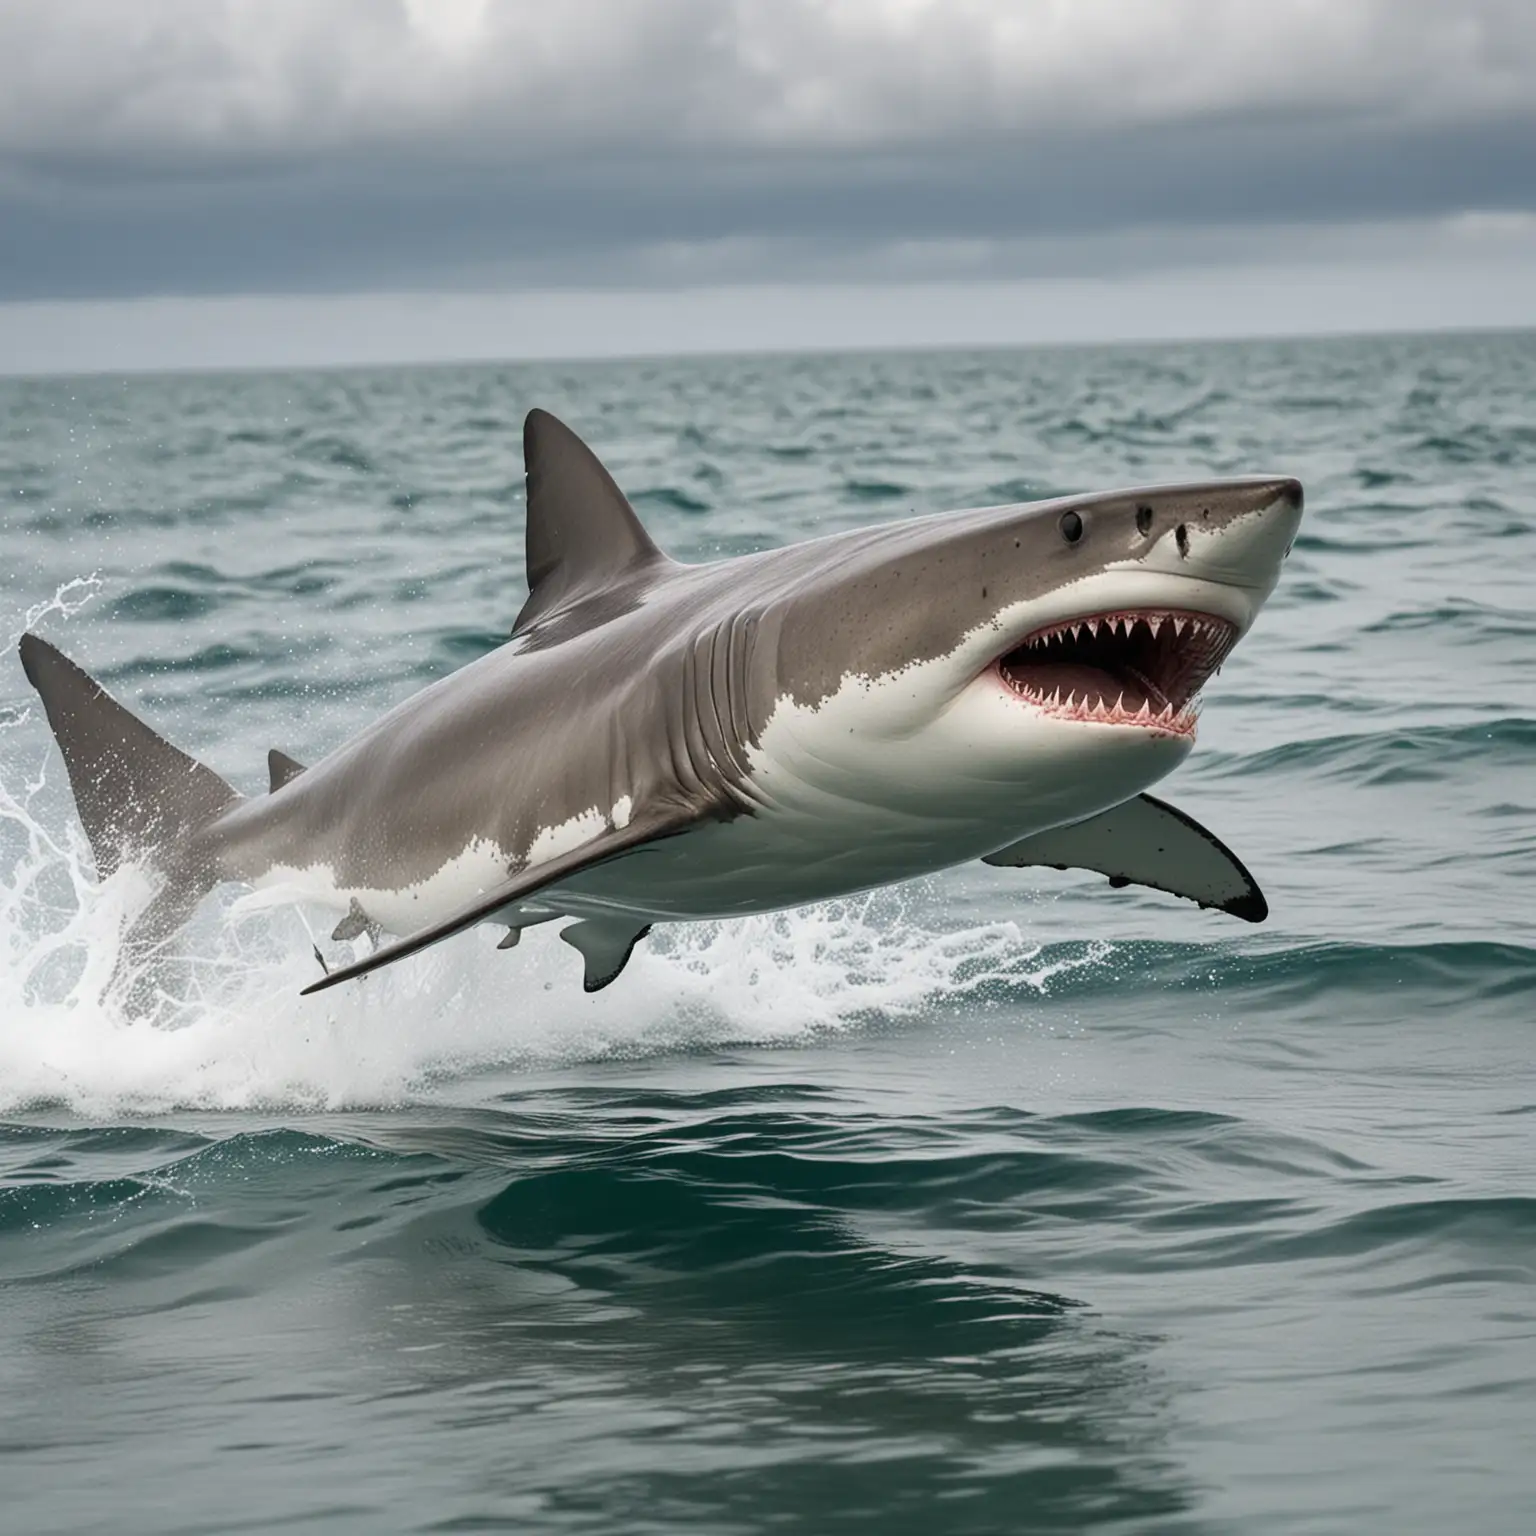 A Shark in high-speed pursuit